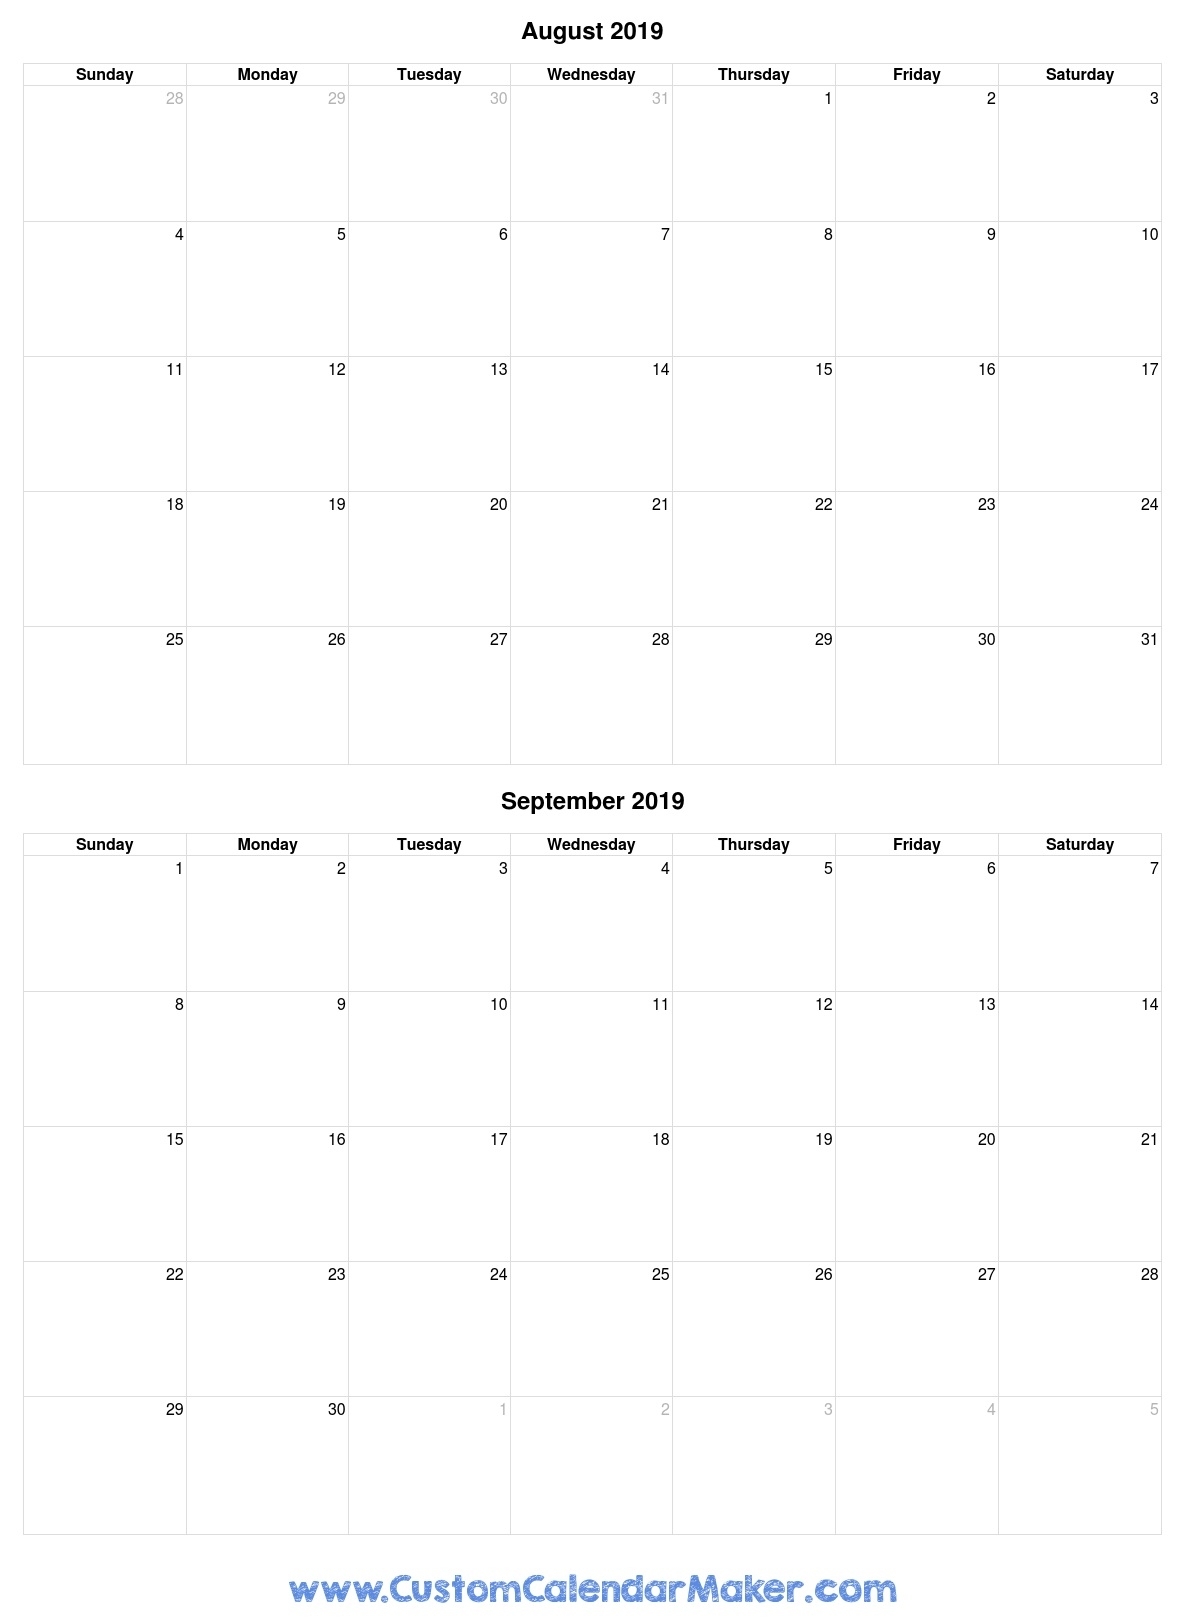 August And September 2019 Free Printable Calendar within August And September Calendar Template